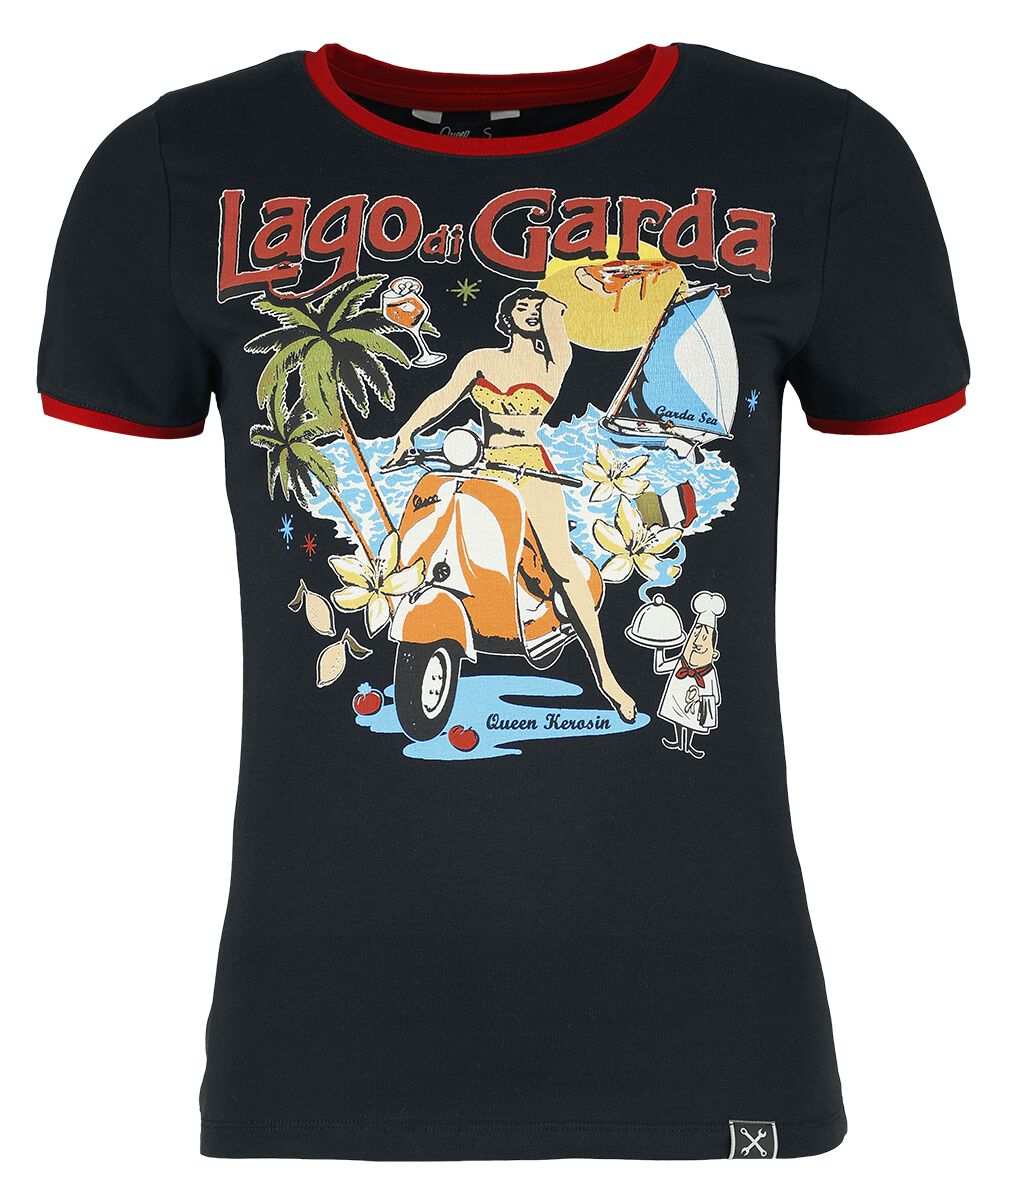 Queen Kerosin Lago Di Garda T-Shirt schwarz rot in 4XL